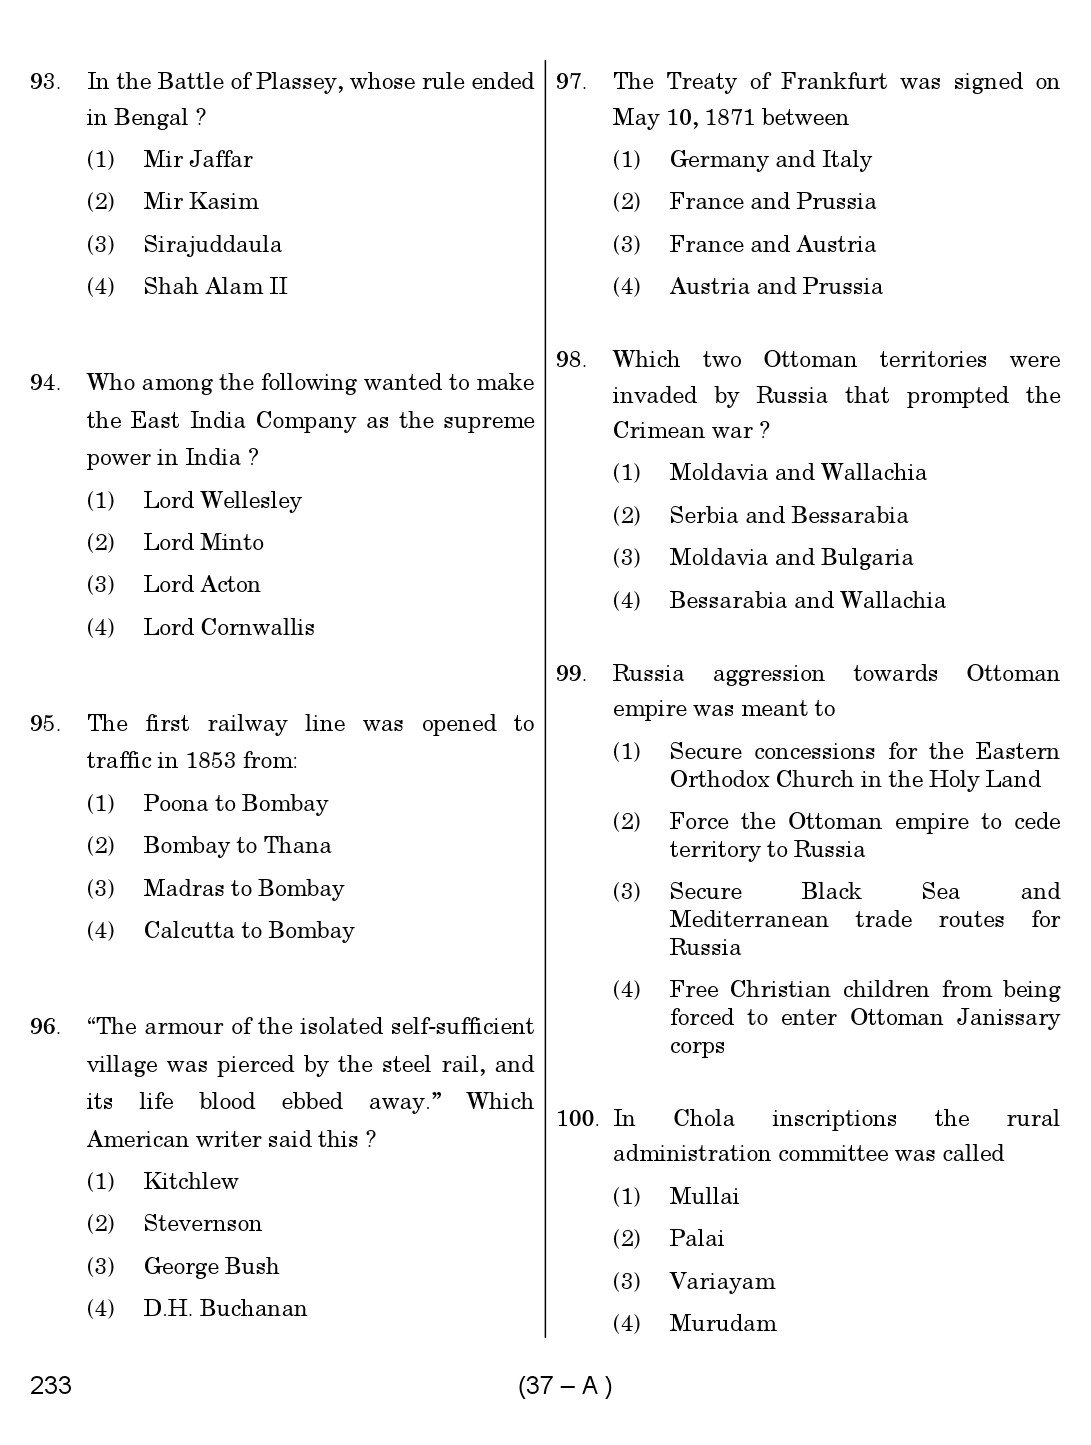 Karnataka PSC History Teacher Exam Sample Question Paper Subject code 233 37